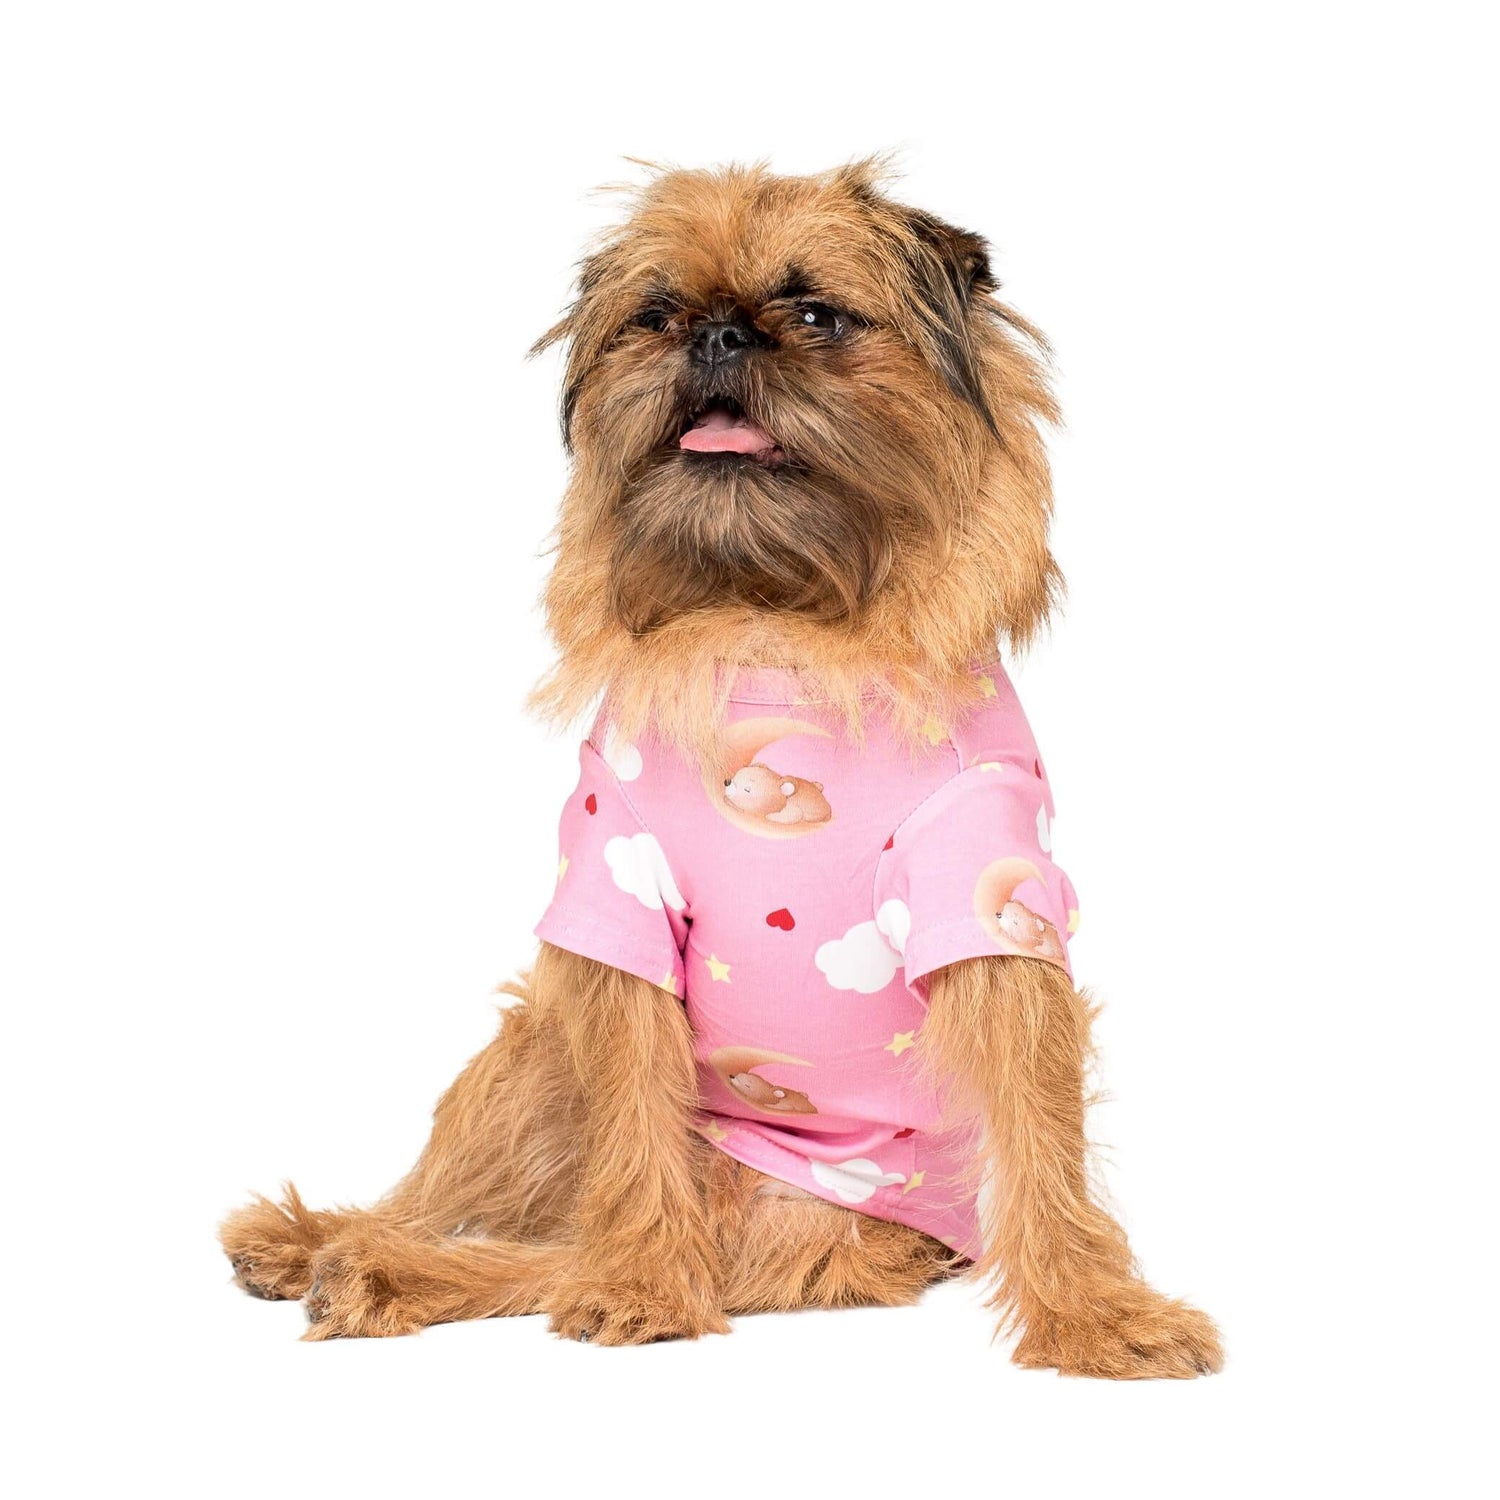 Gromit the Griffon sitting down wearing a pink Vibrant Hound Lil Dreamer dog pyjamas.